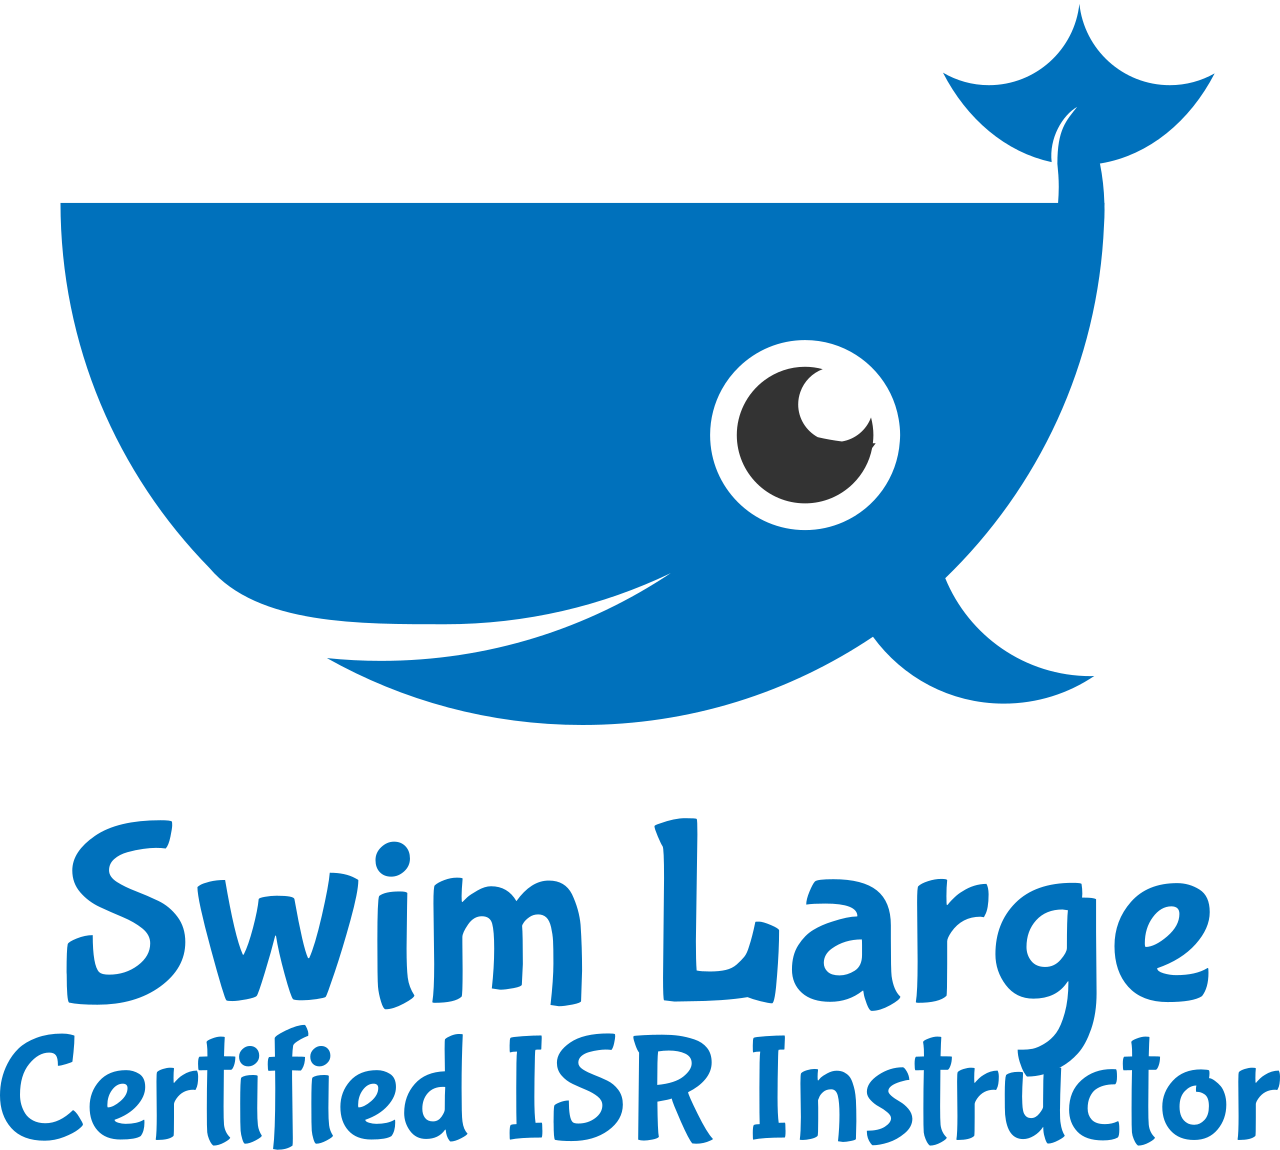 Swim Large's logo